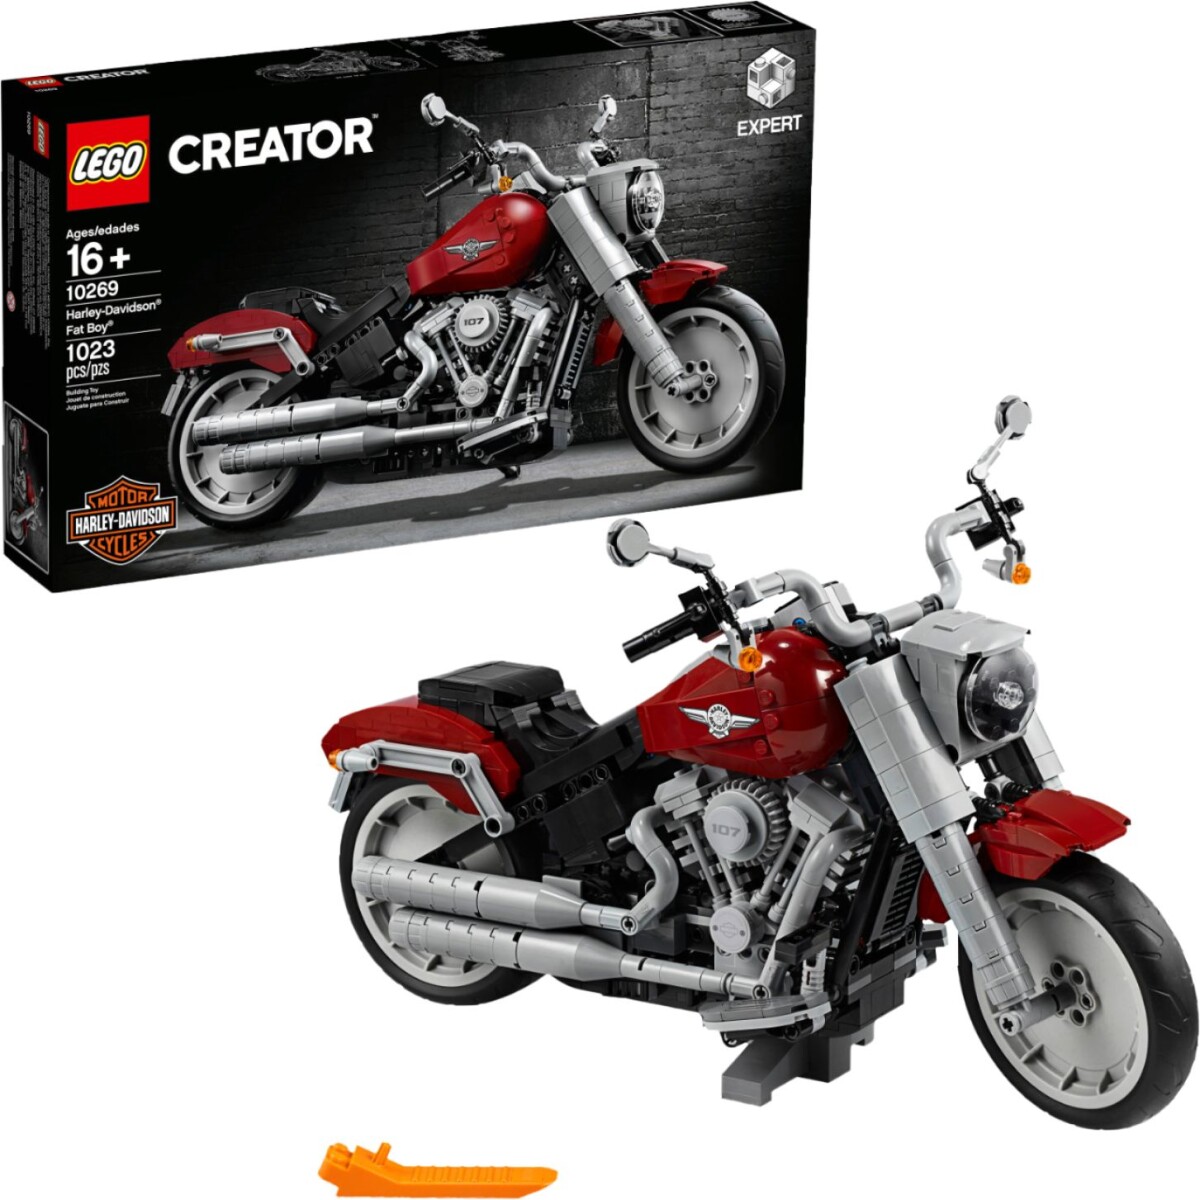 Lego Creator Experto Moto Harley Davidson 1023pzs - 001 